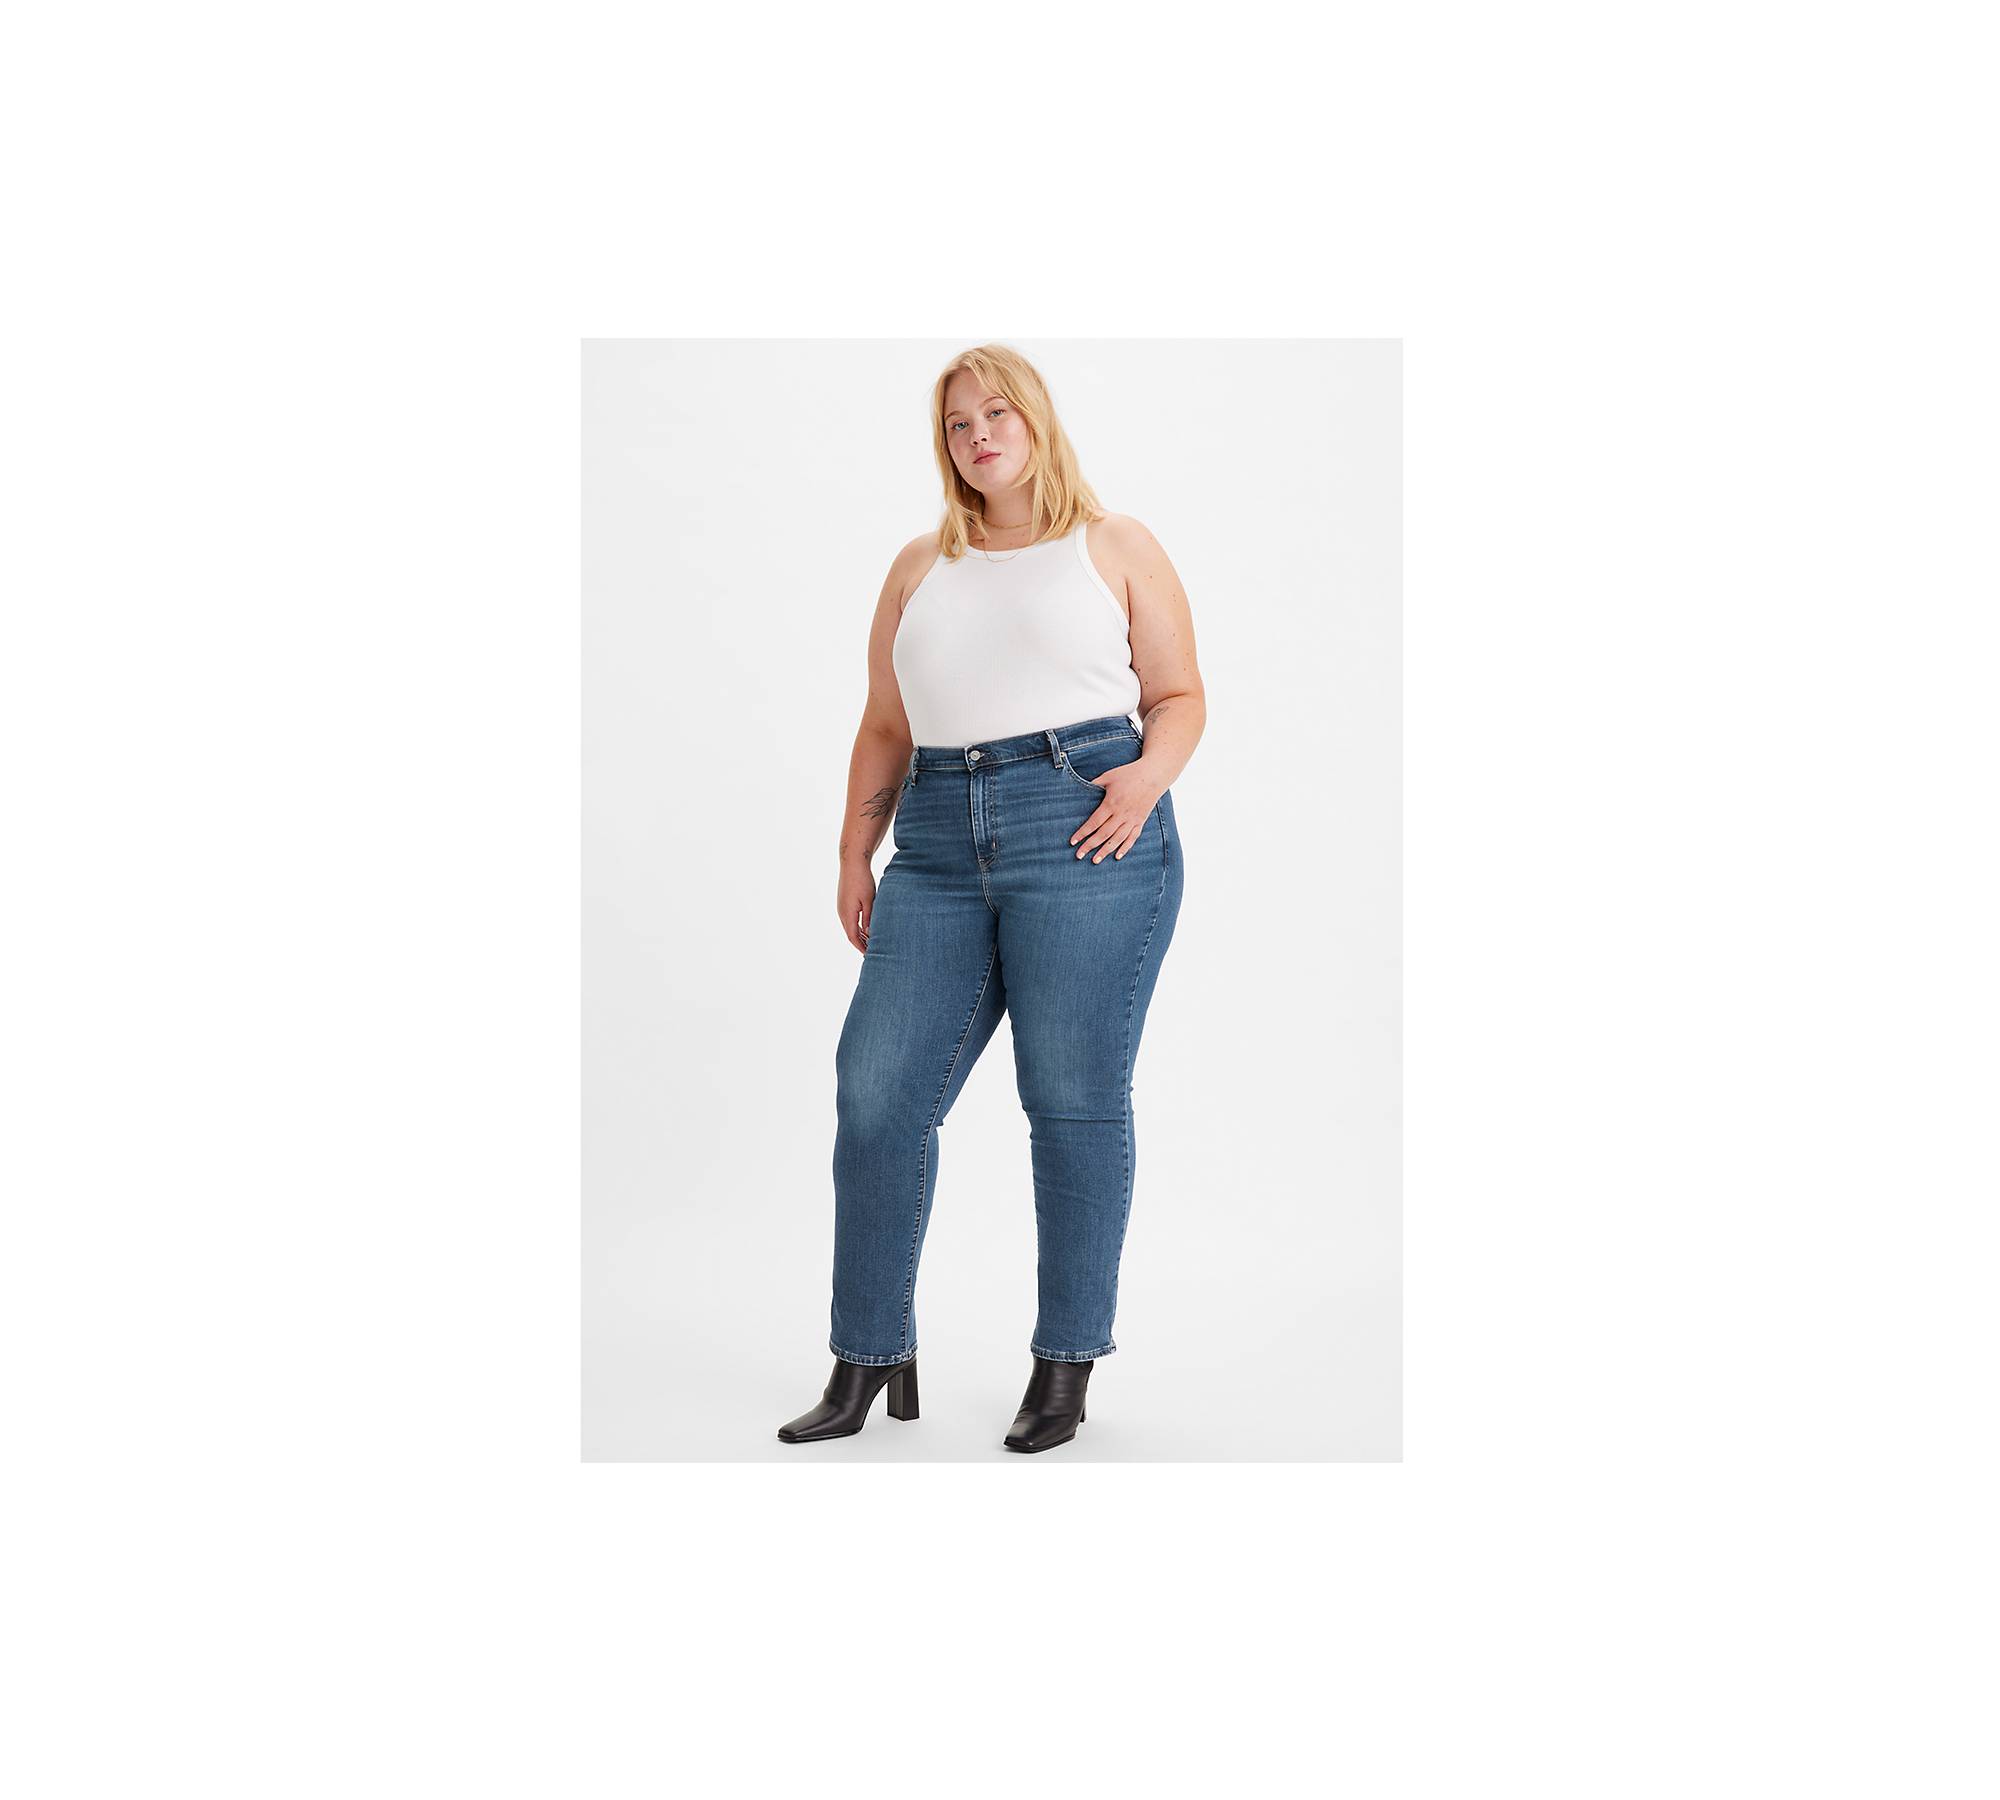 kor Premium Womens Plus tamaño Stretch Azul Skinny Denim Jeans – Pantalones